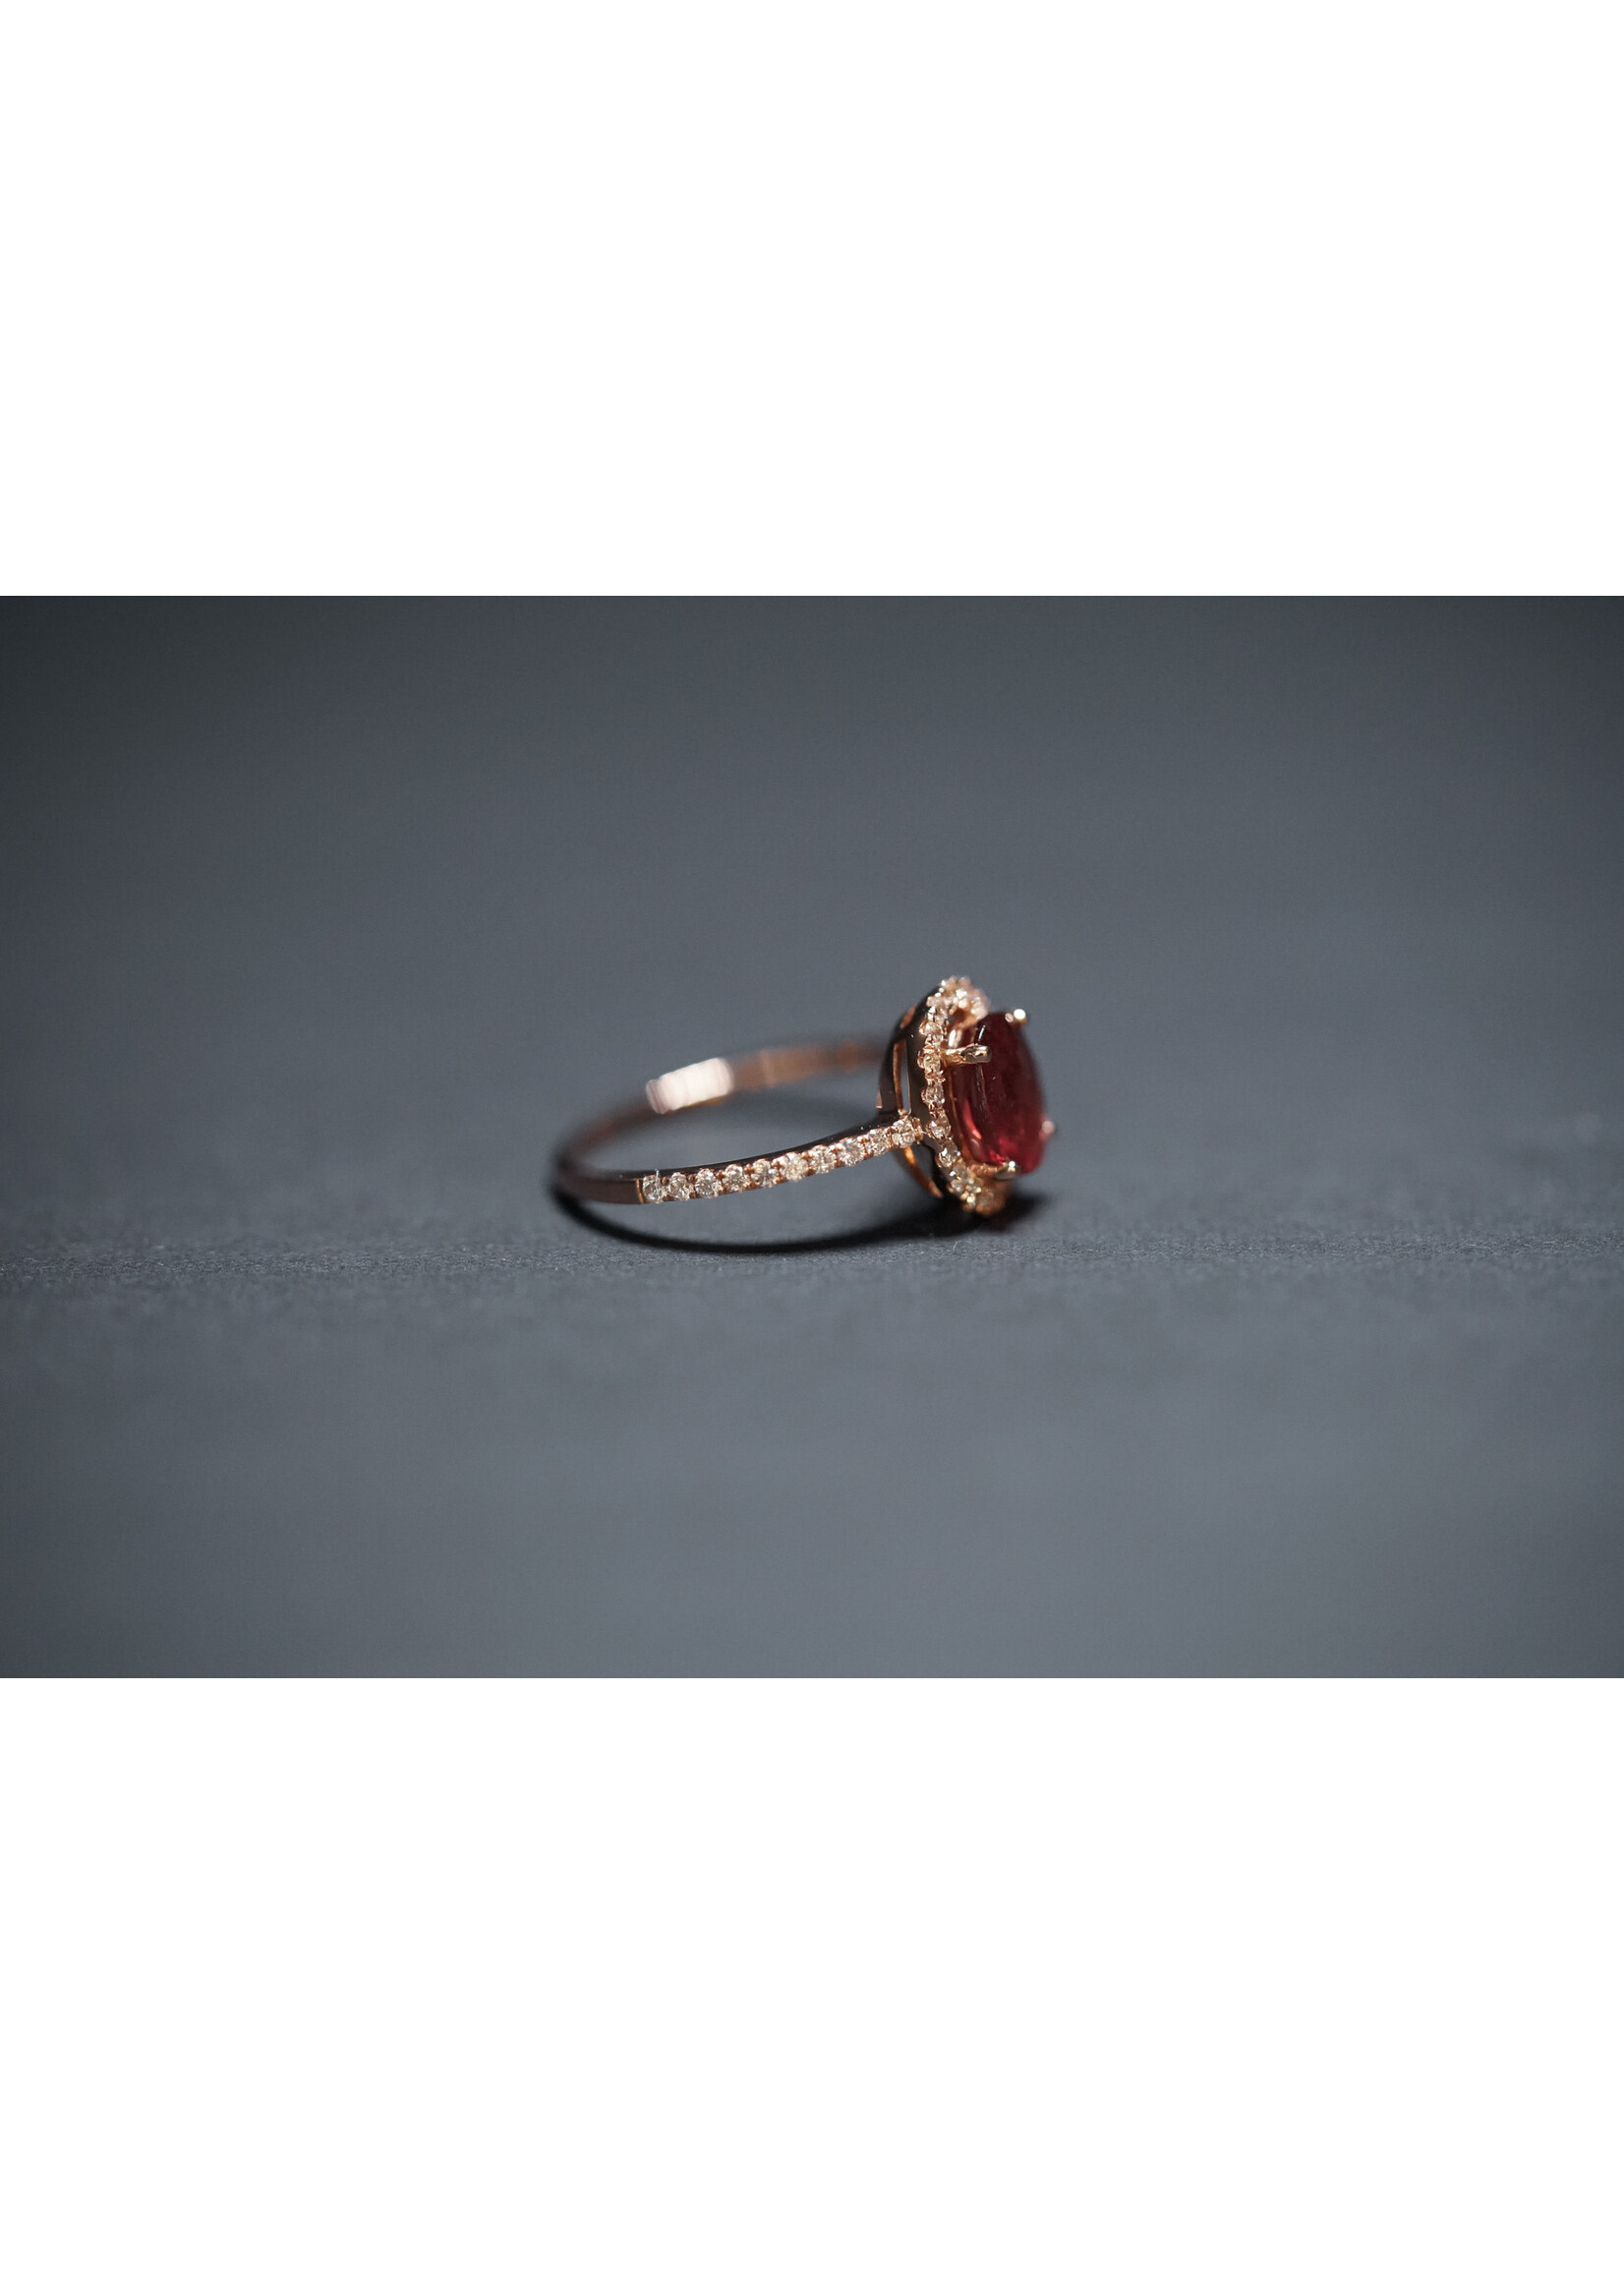 14KR 2.4g 1.62ctw (1.20ctr) Rubelite & Diamond Halo Fashion Ring (size 7)